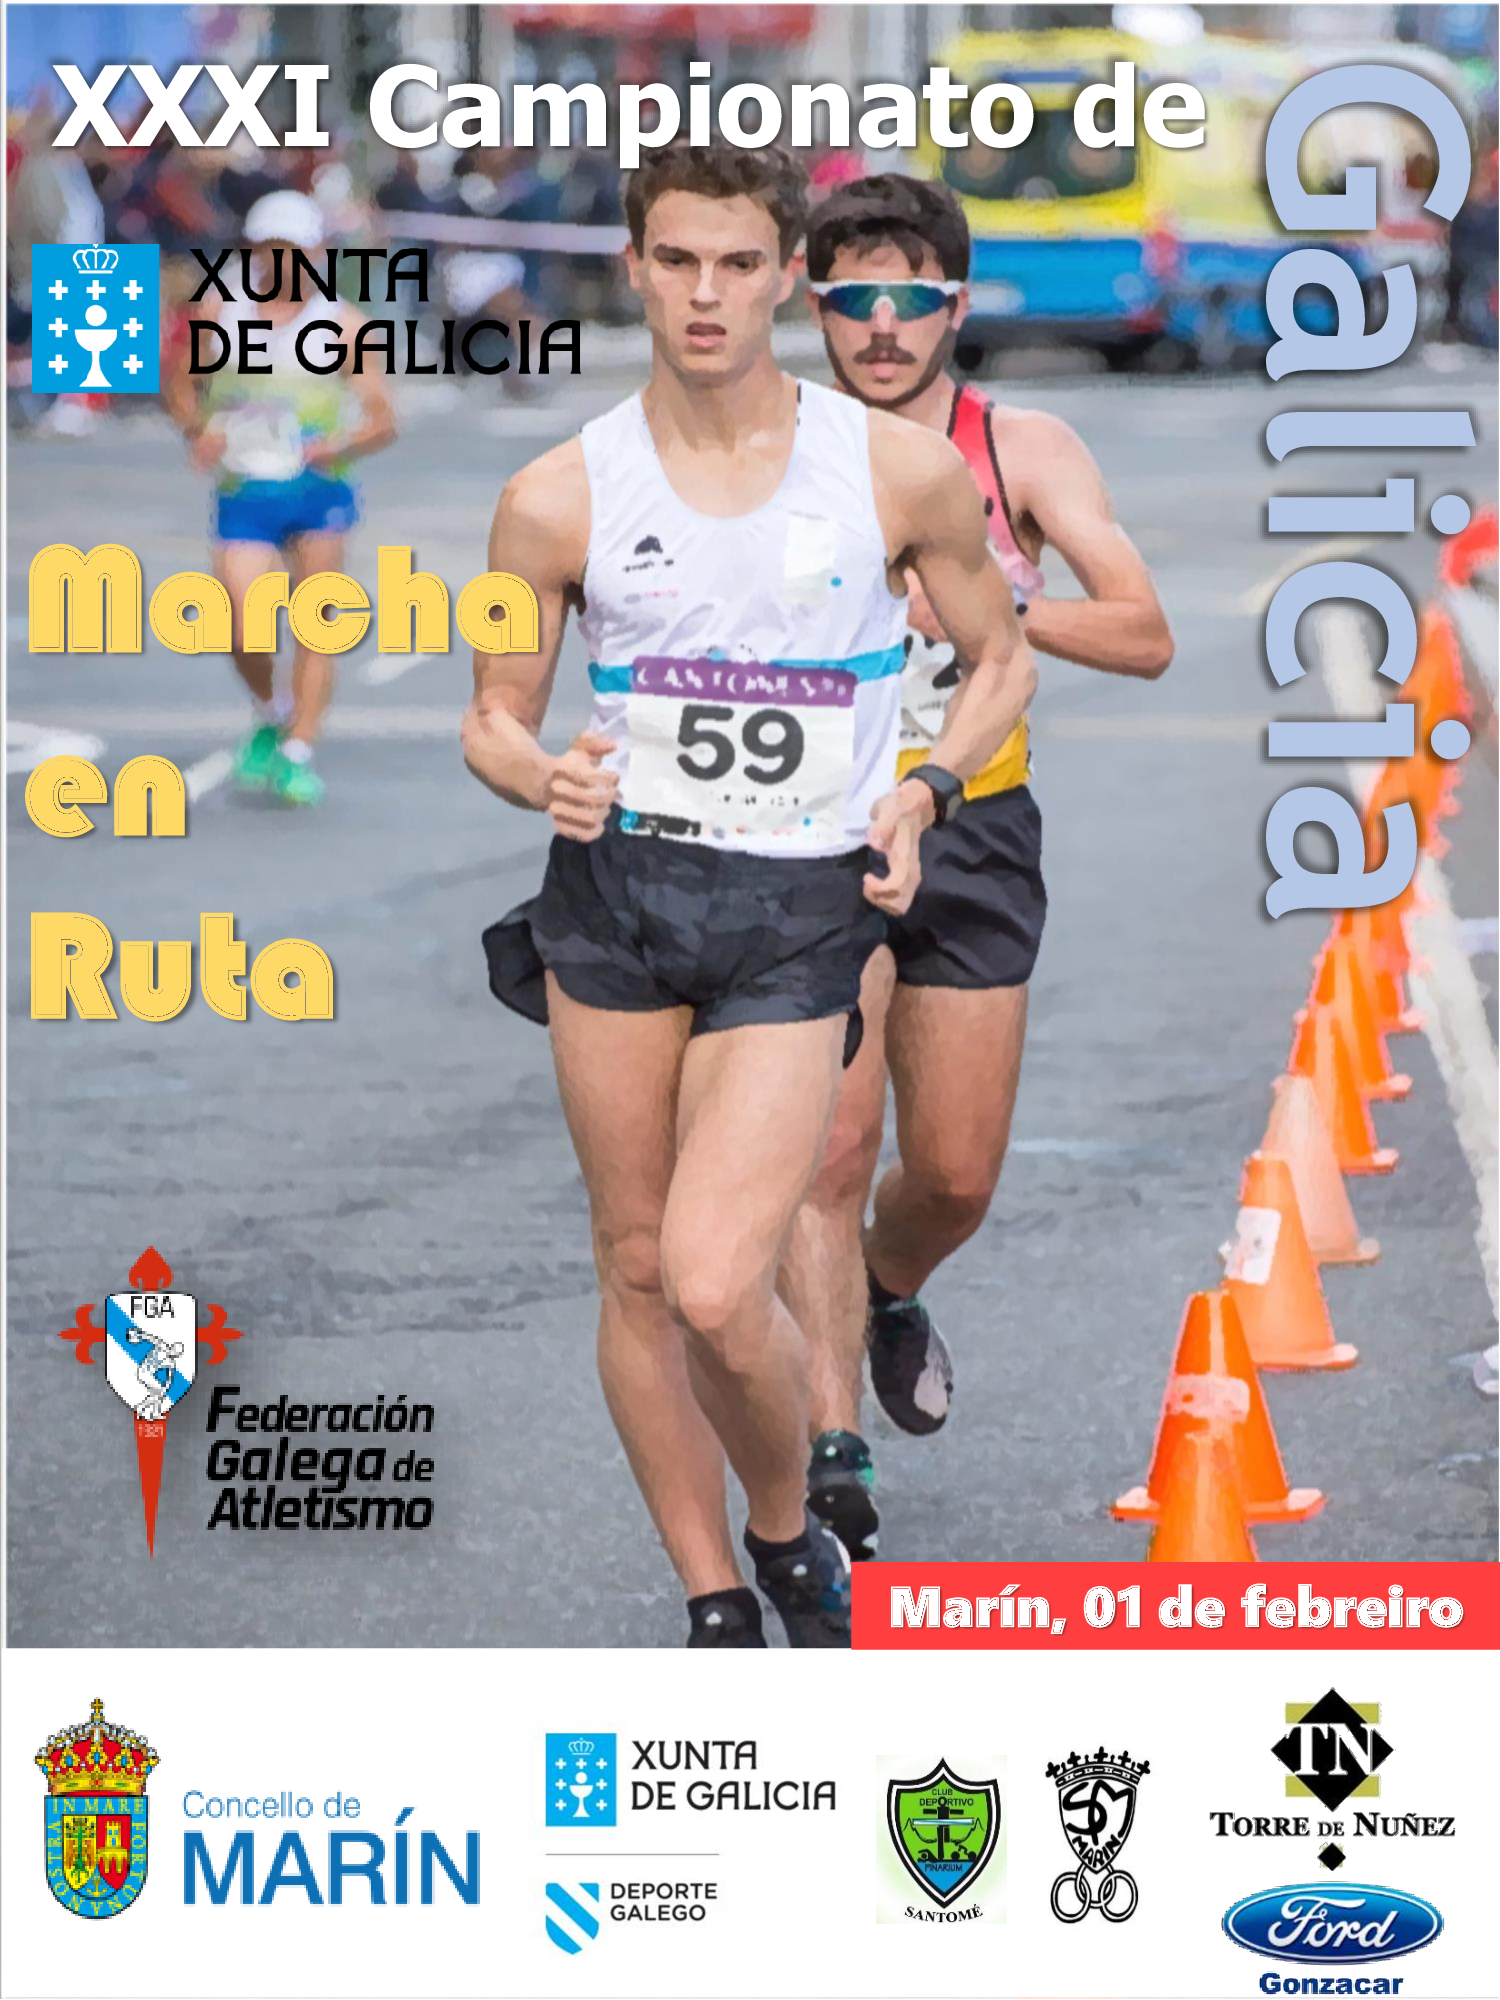 XXXI Campionato de Galicia de Marcha en Ruta